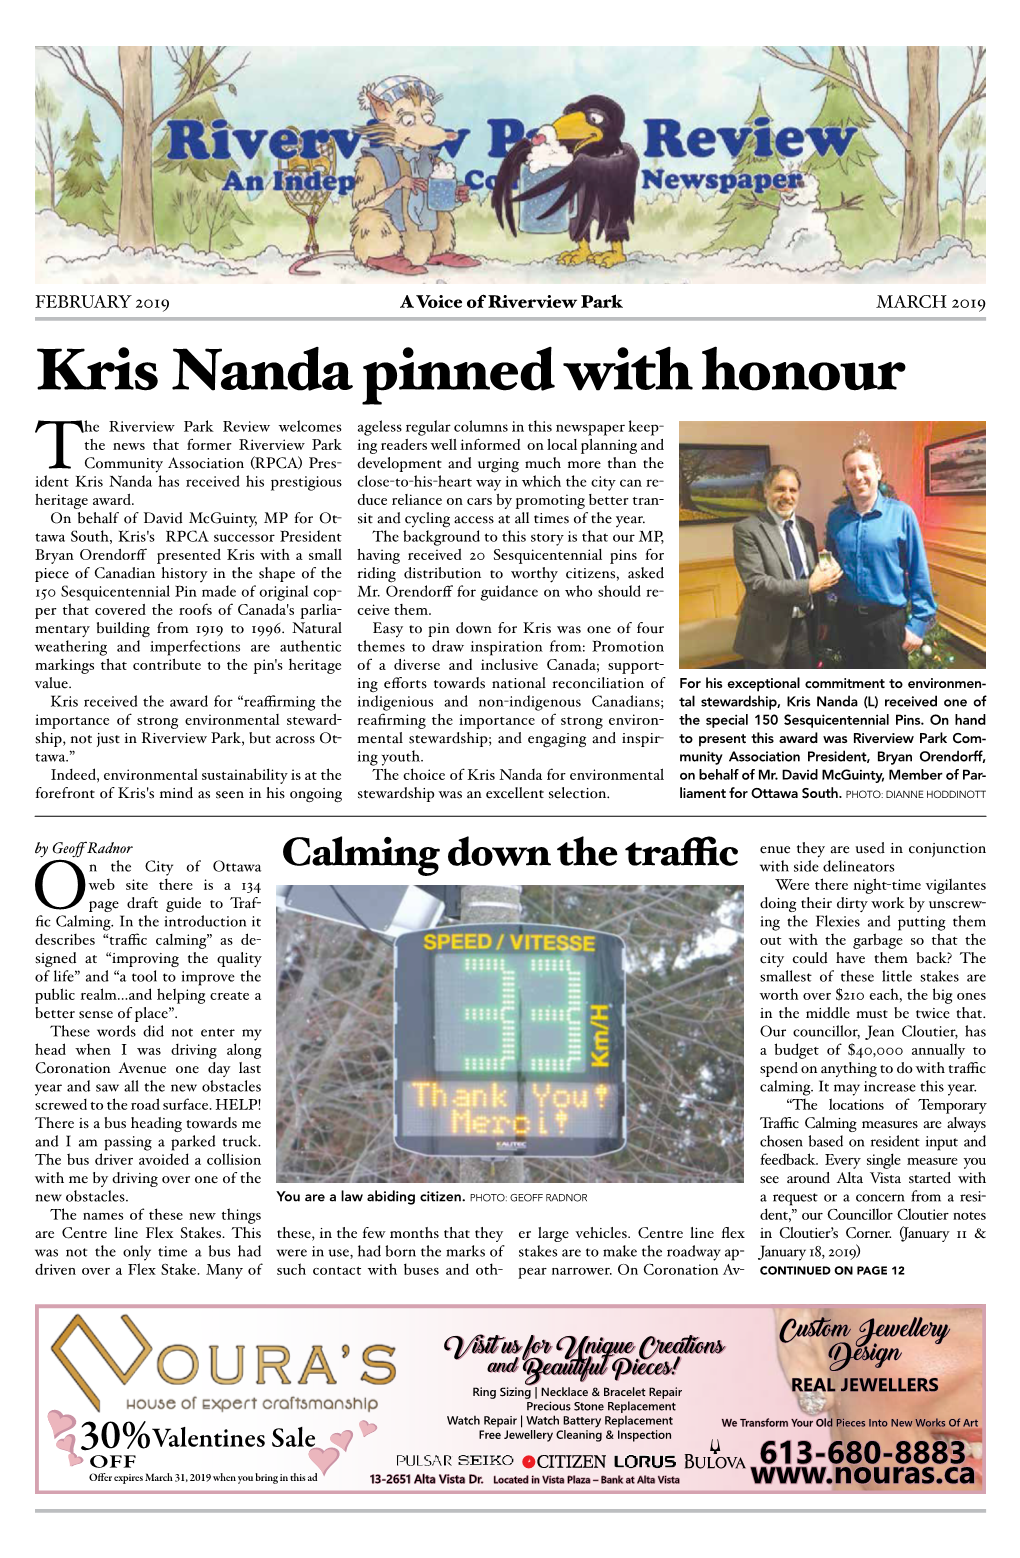 Kris Nanda Pinned with Honour